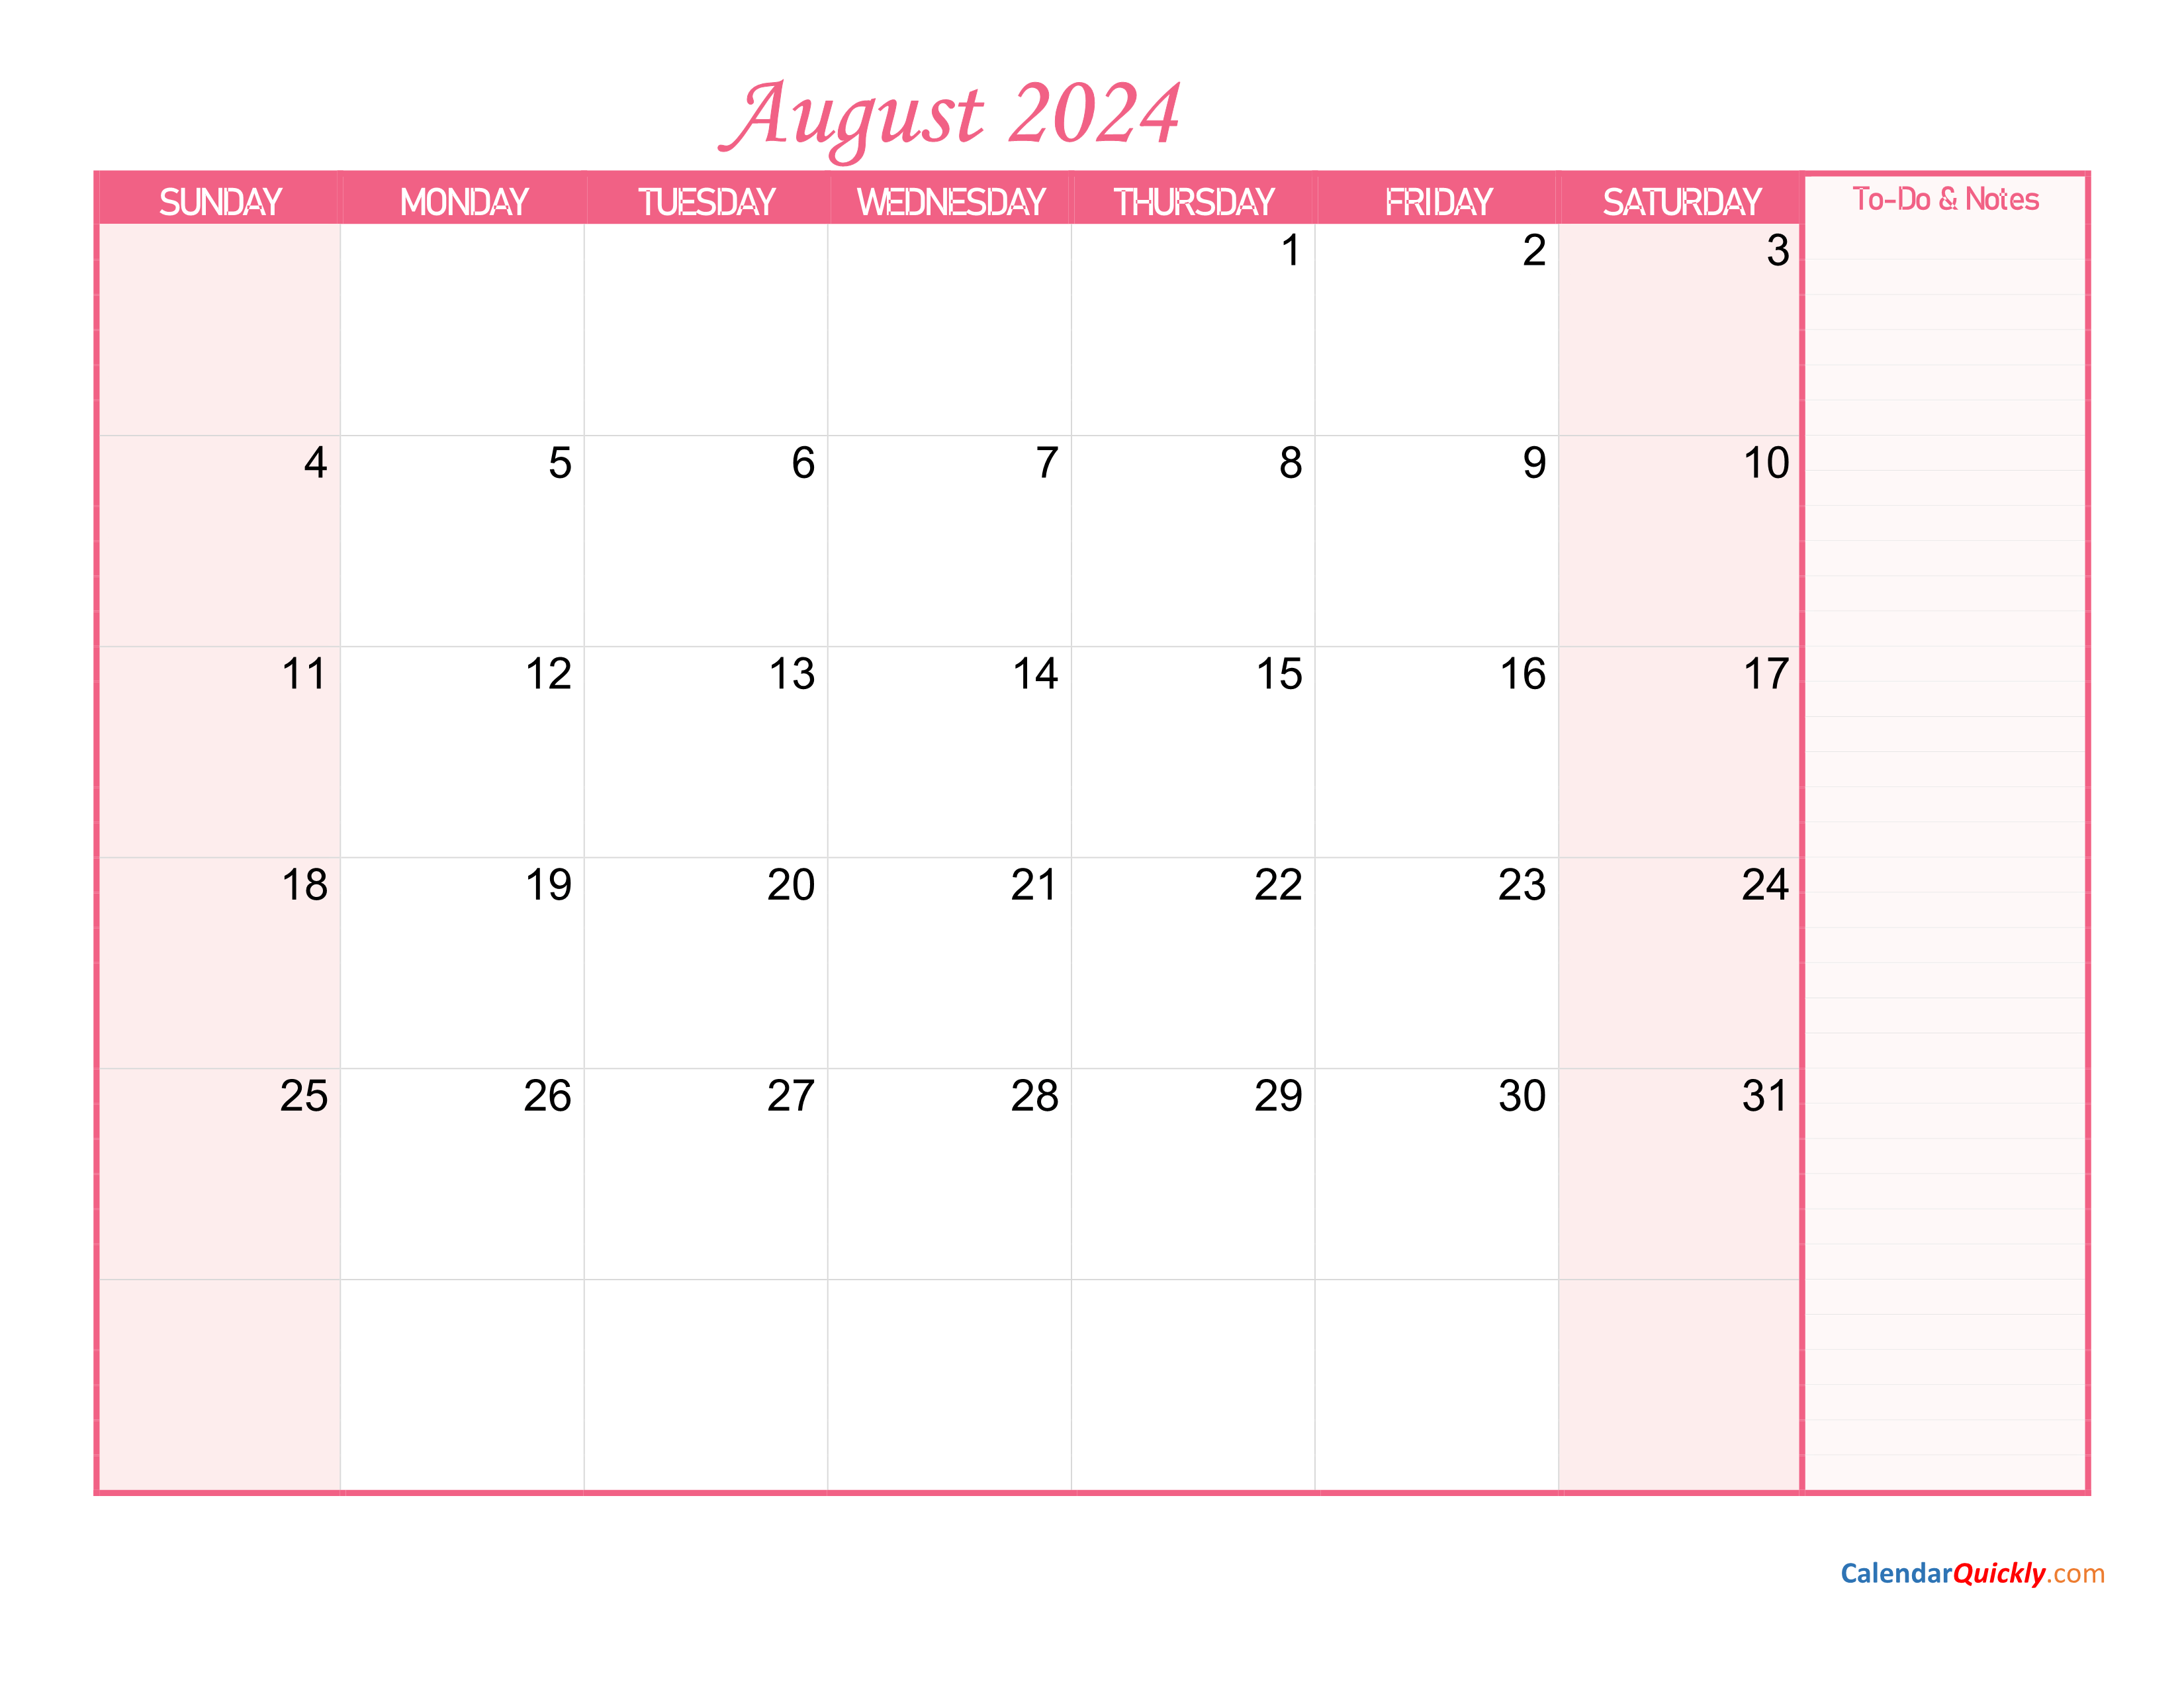 Earnings Calendar August 2024 Cool Awasome Incredible January 2024